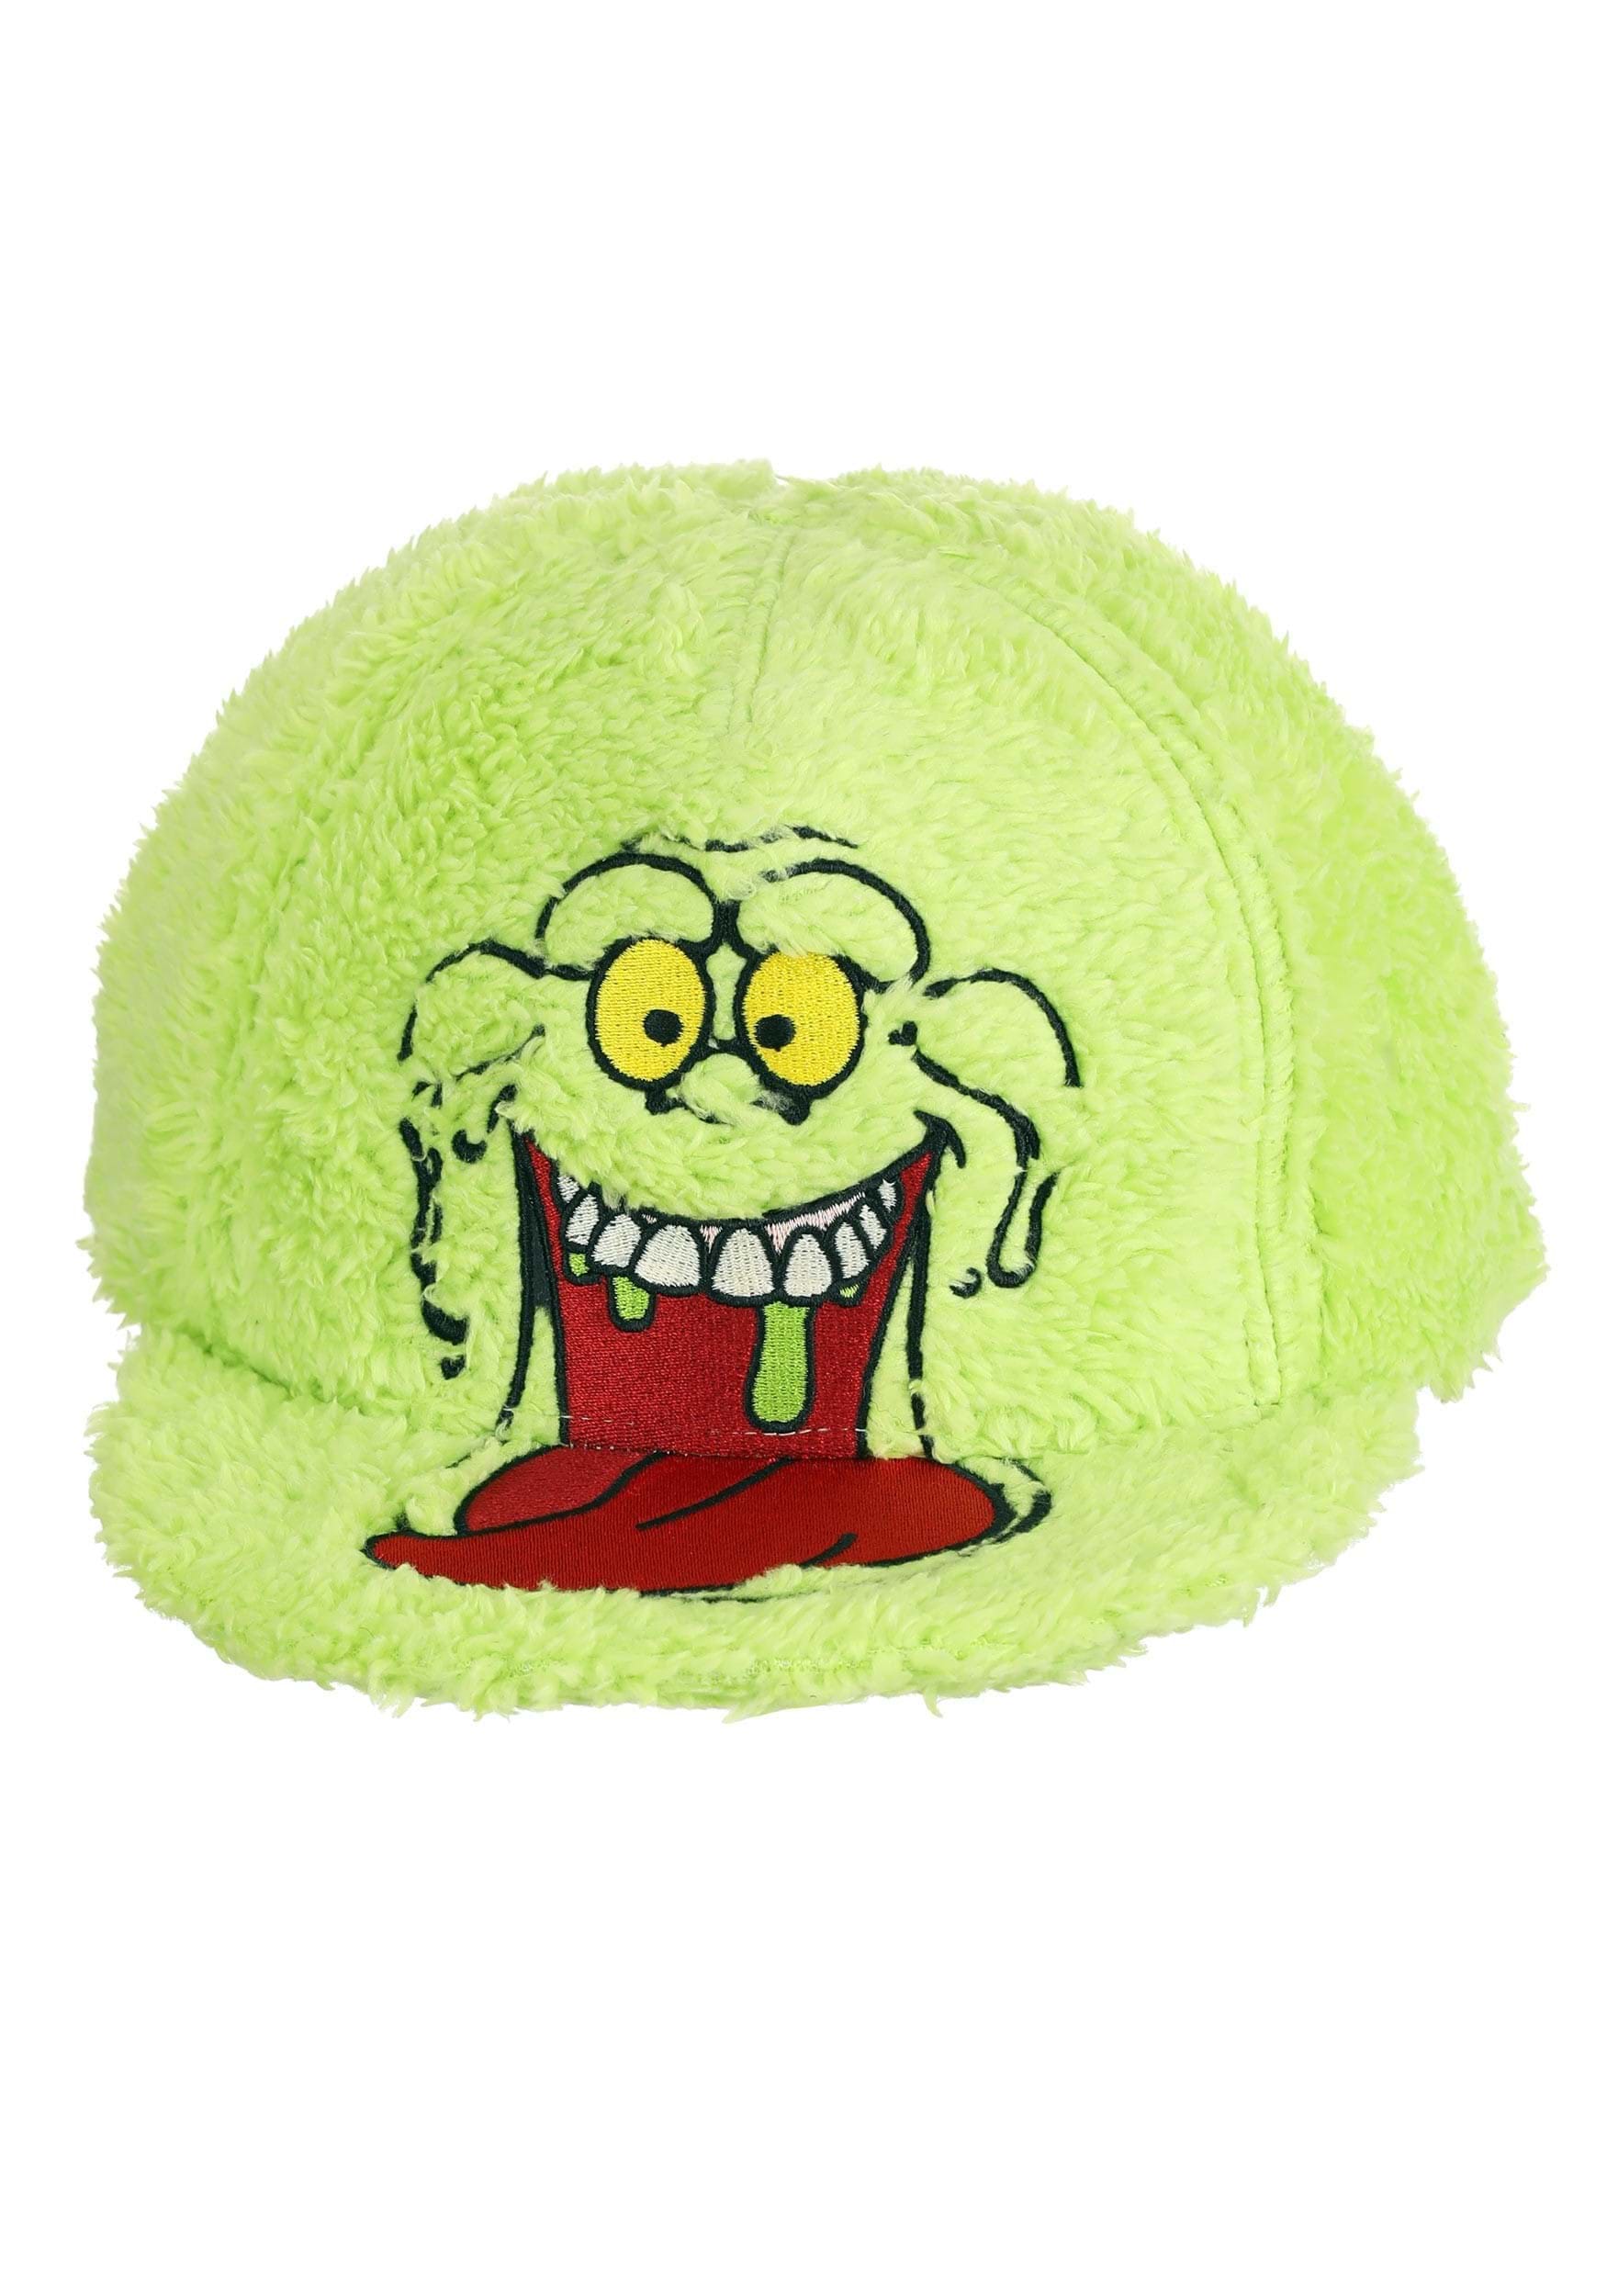 Ghostbusters Slimer Fuzzy Cap